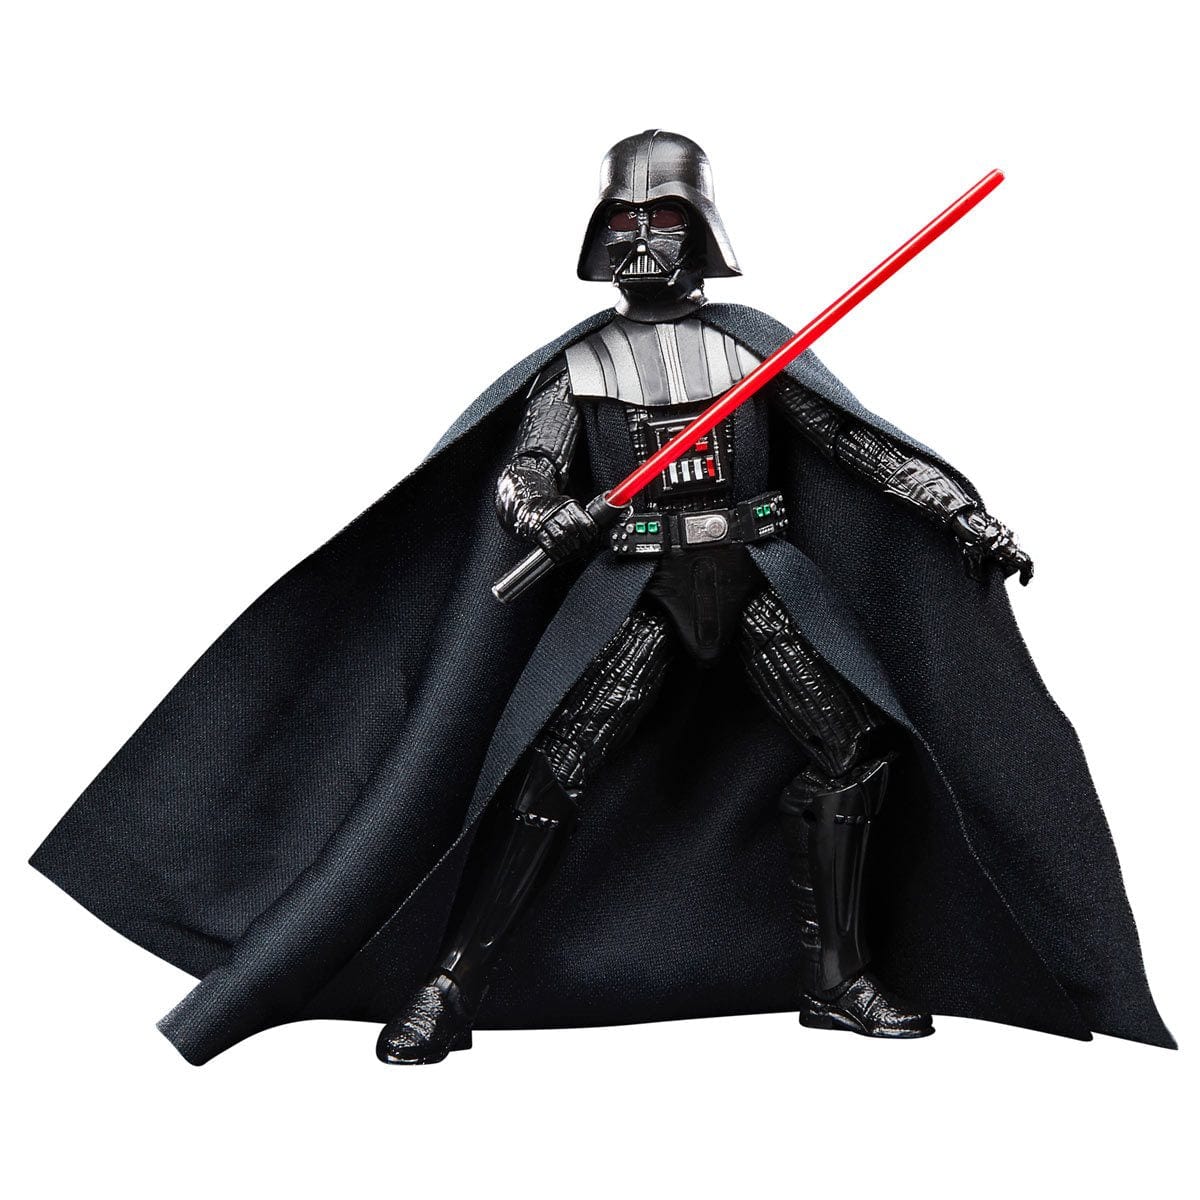 Star Wars Black Series ROTJ 6-Inch Darth Vader Action Figure